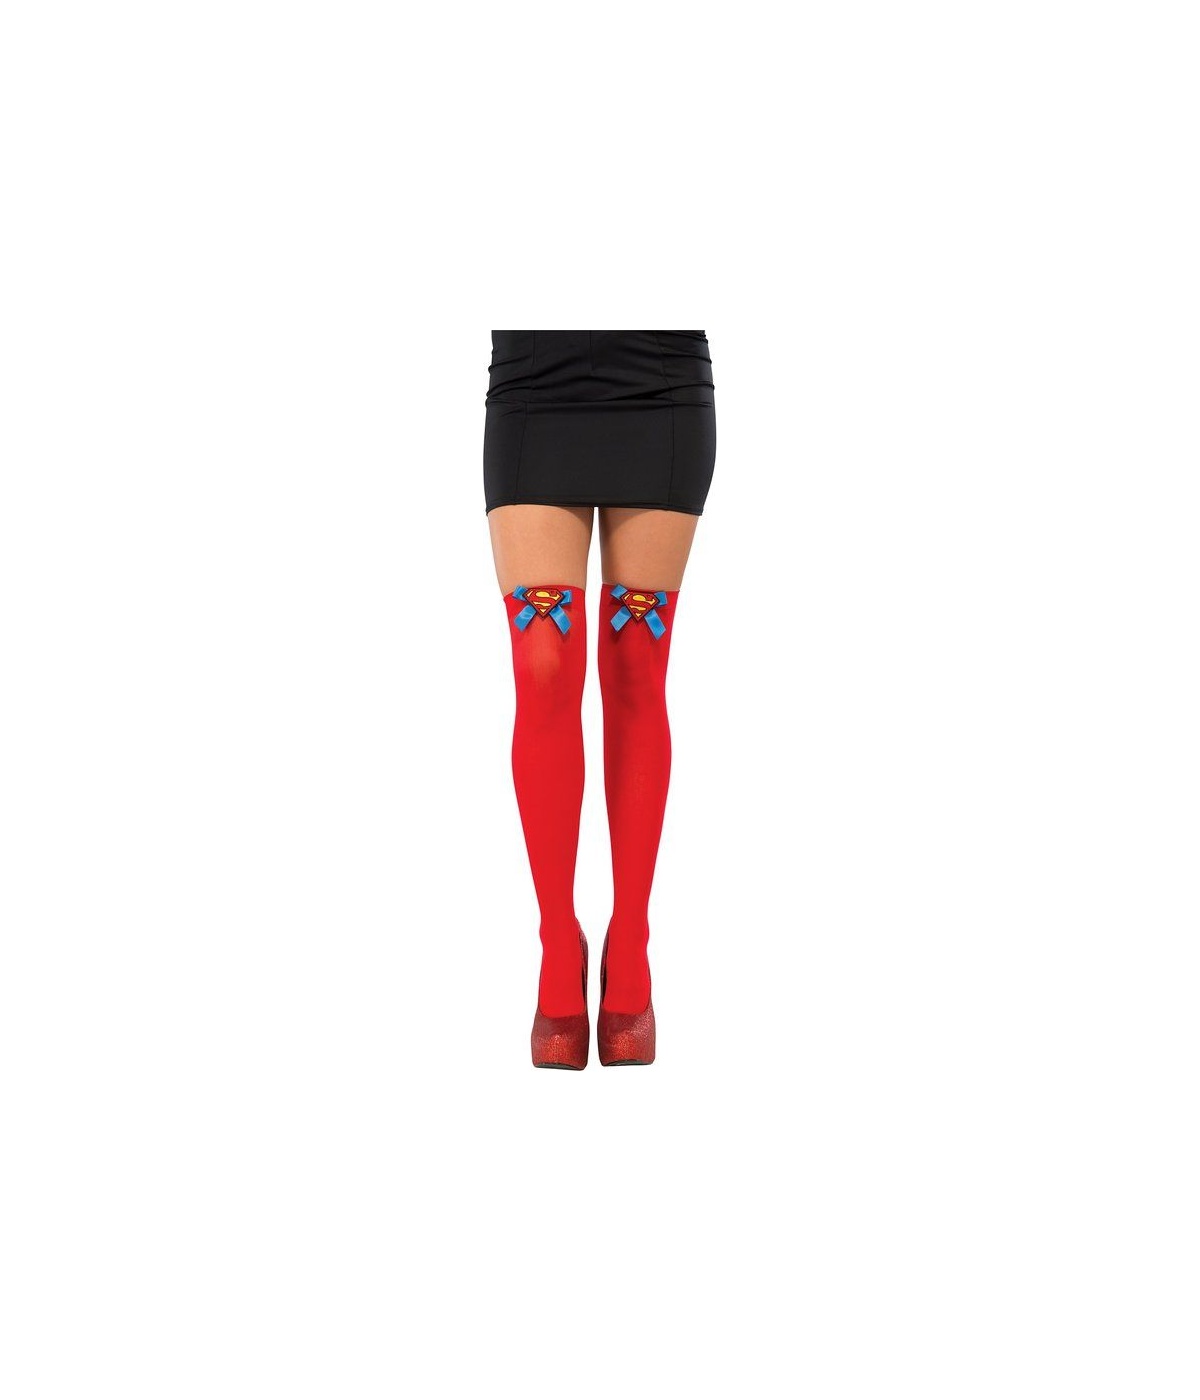  Womens Supergirl Thigh High Stockings